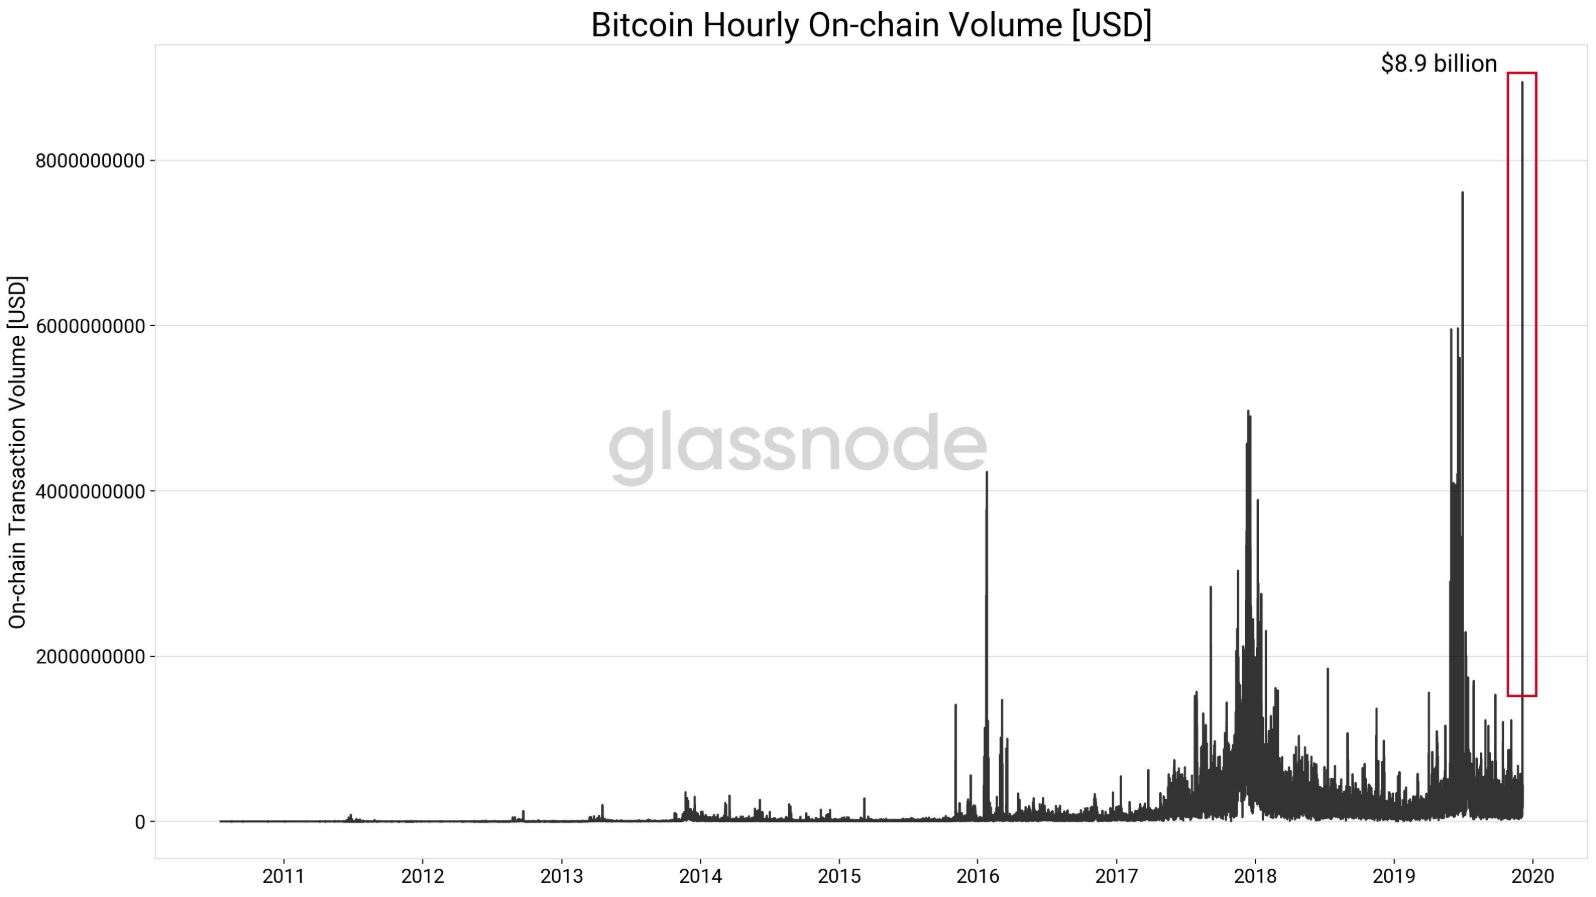 Bitcoin hourly on-chain transaction volume in U.S. dollars.